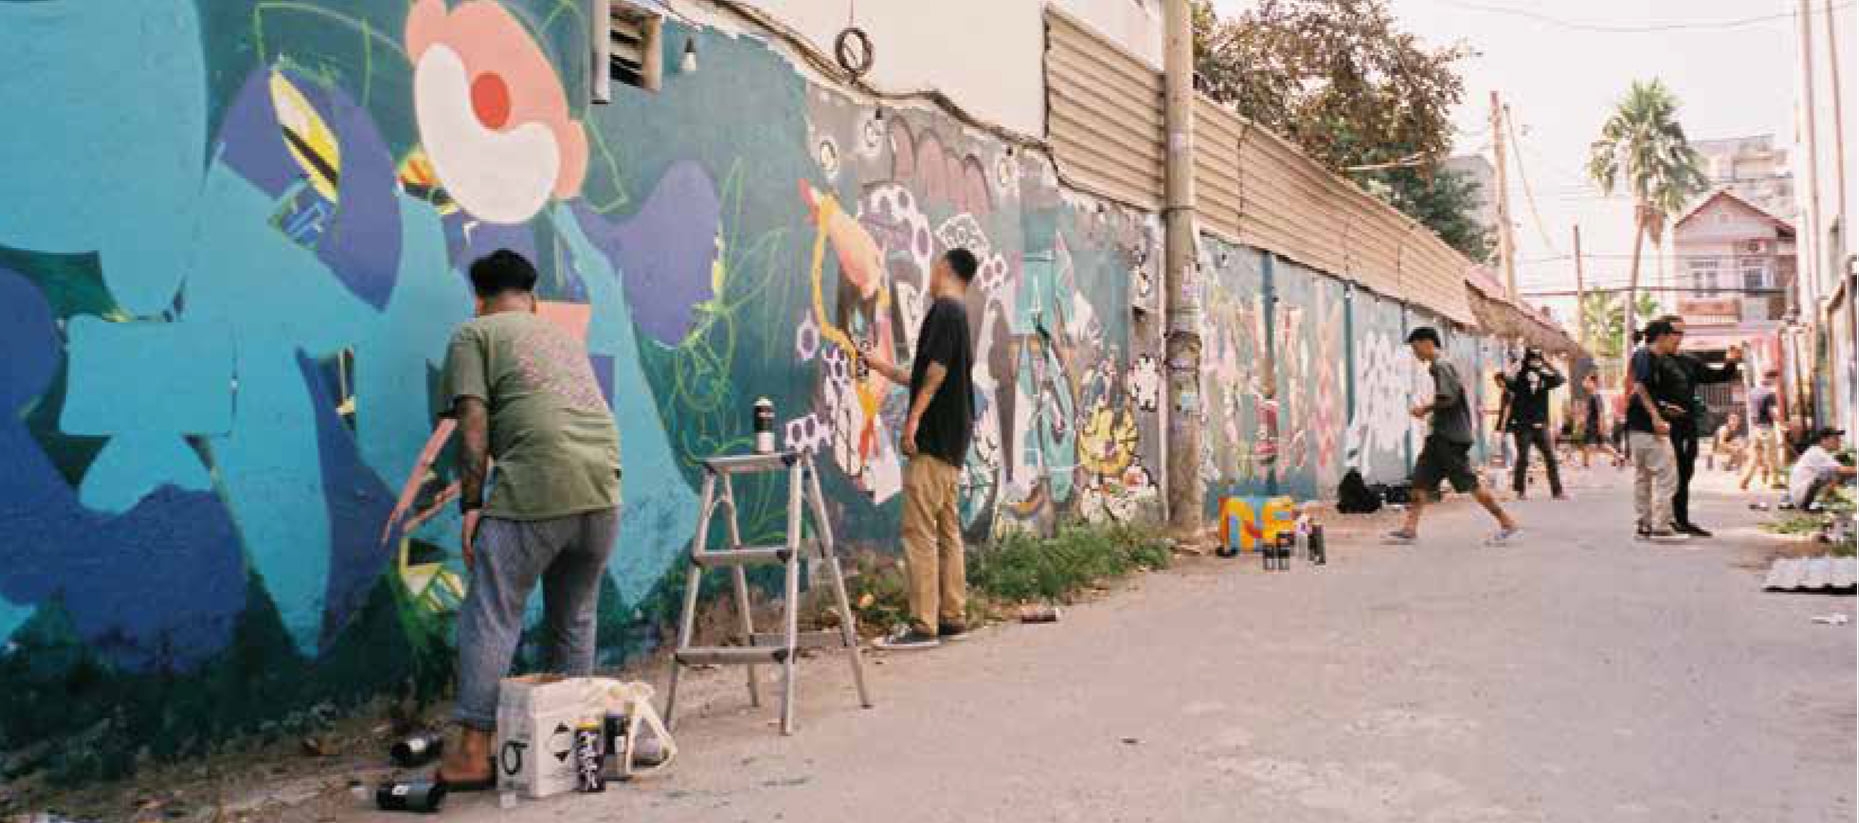 2021 saigon urban arts is scheduled to begin this april